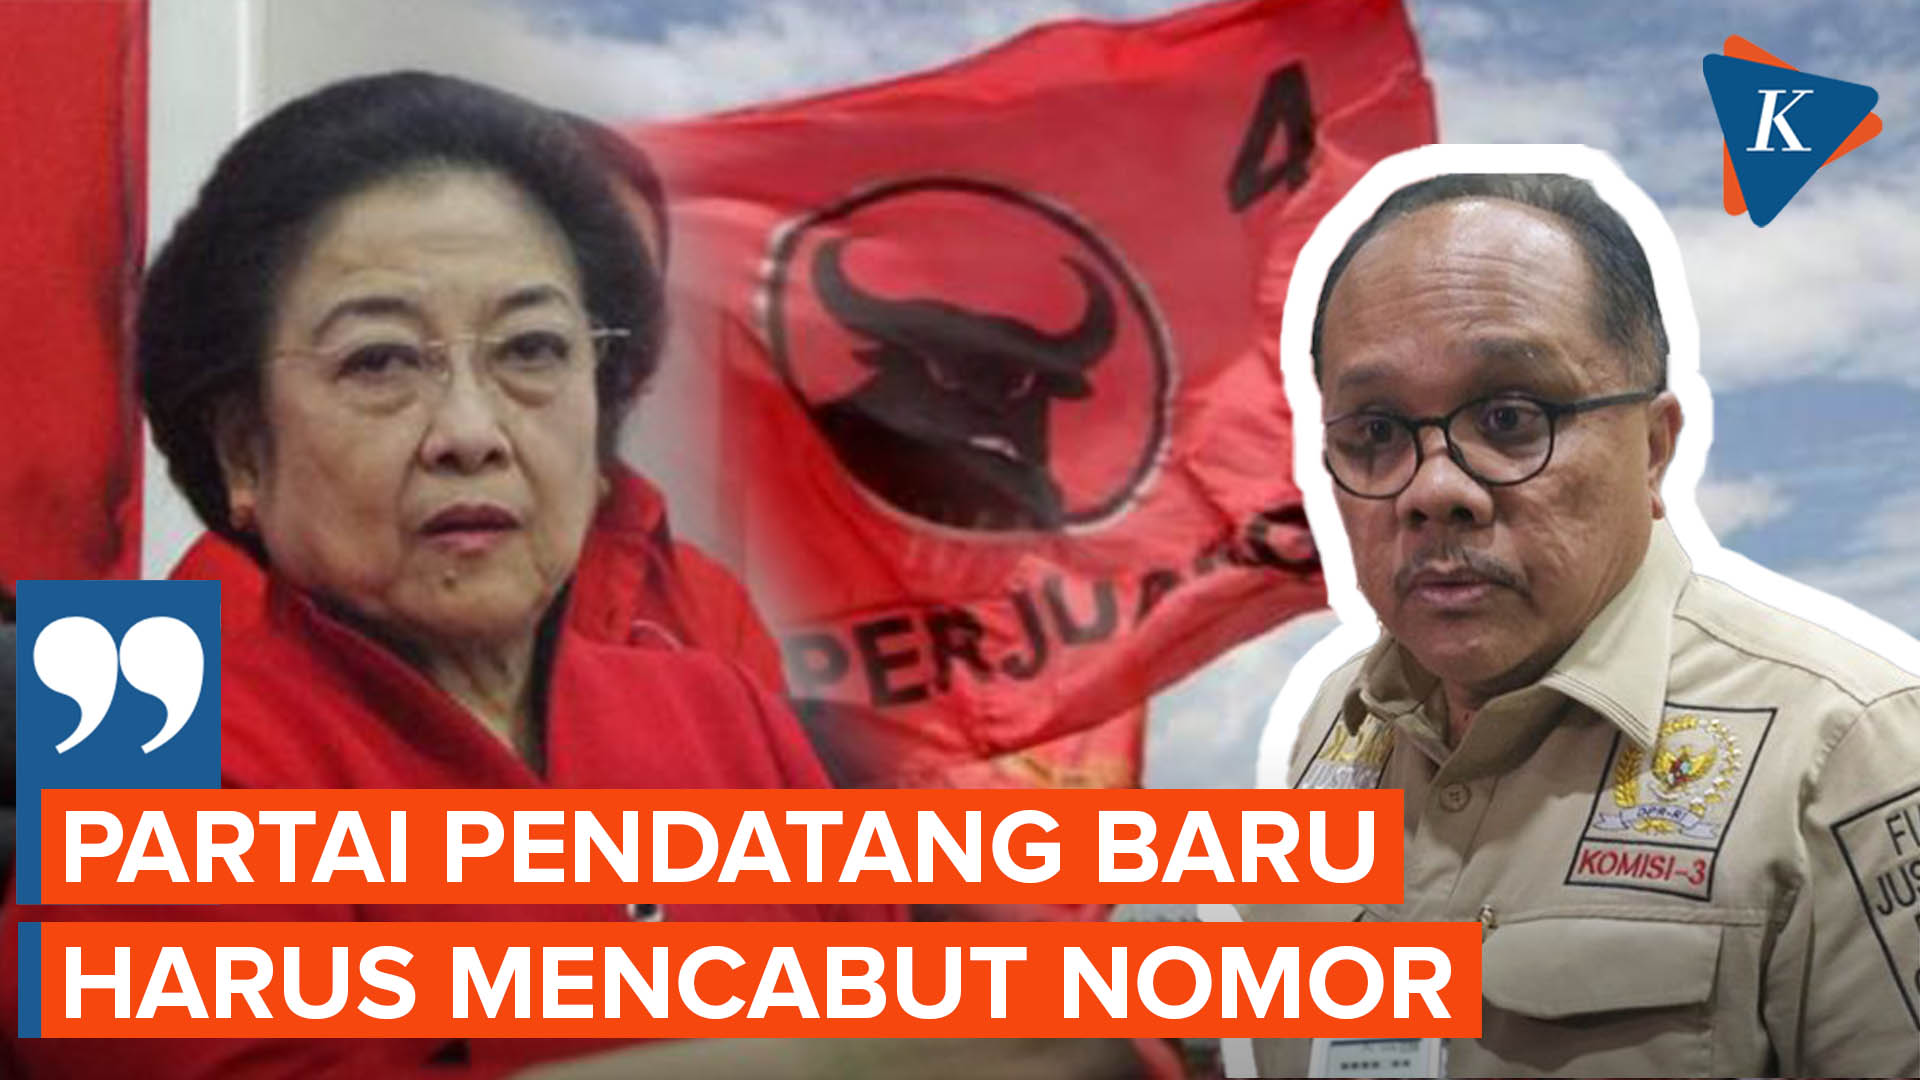 Politikus PDI-P Tanggapi Usulan Megawati soal Pengundian Nomor Urut Parpol